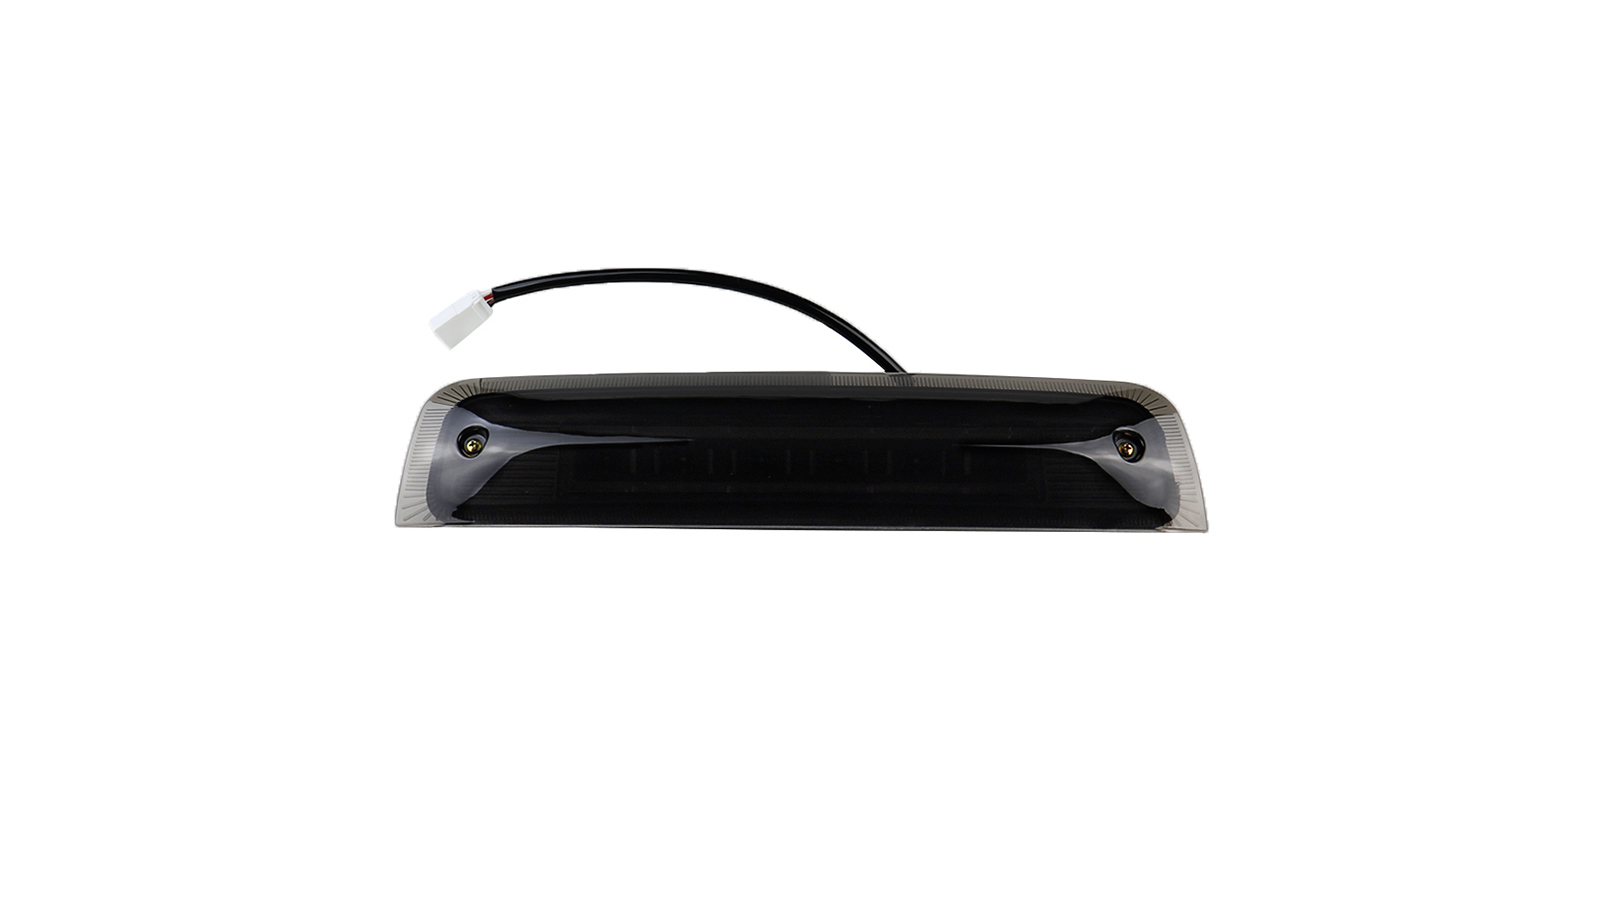 Black LED Third 3rd Brake Light Rear Tail Lamp Replacament For Dodge Ram 1500 2500 3500 2010-2018